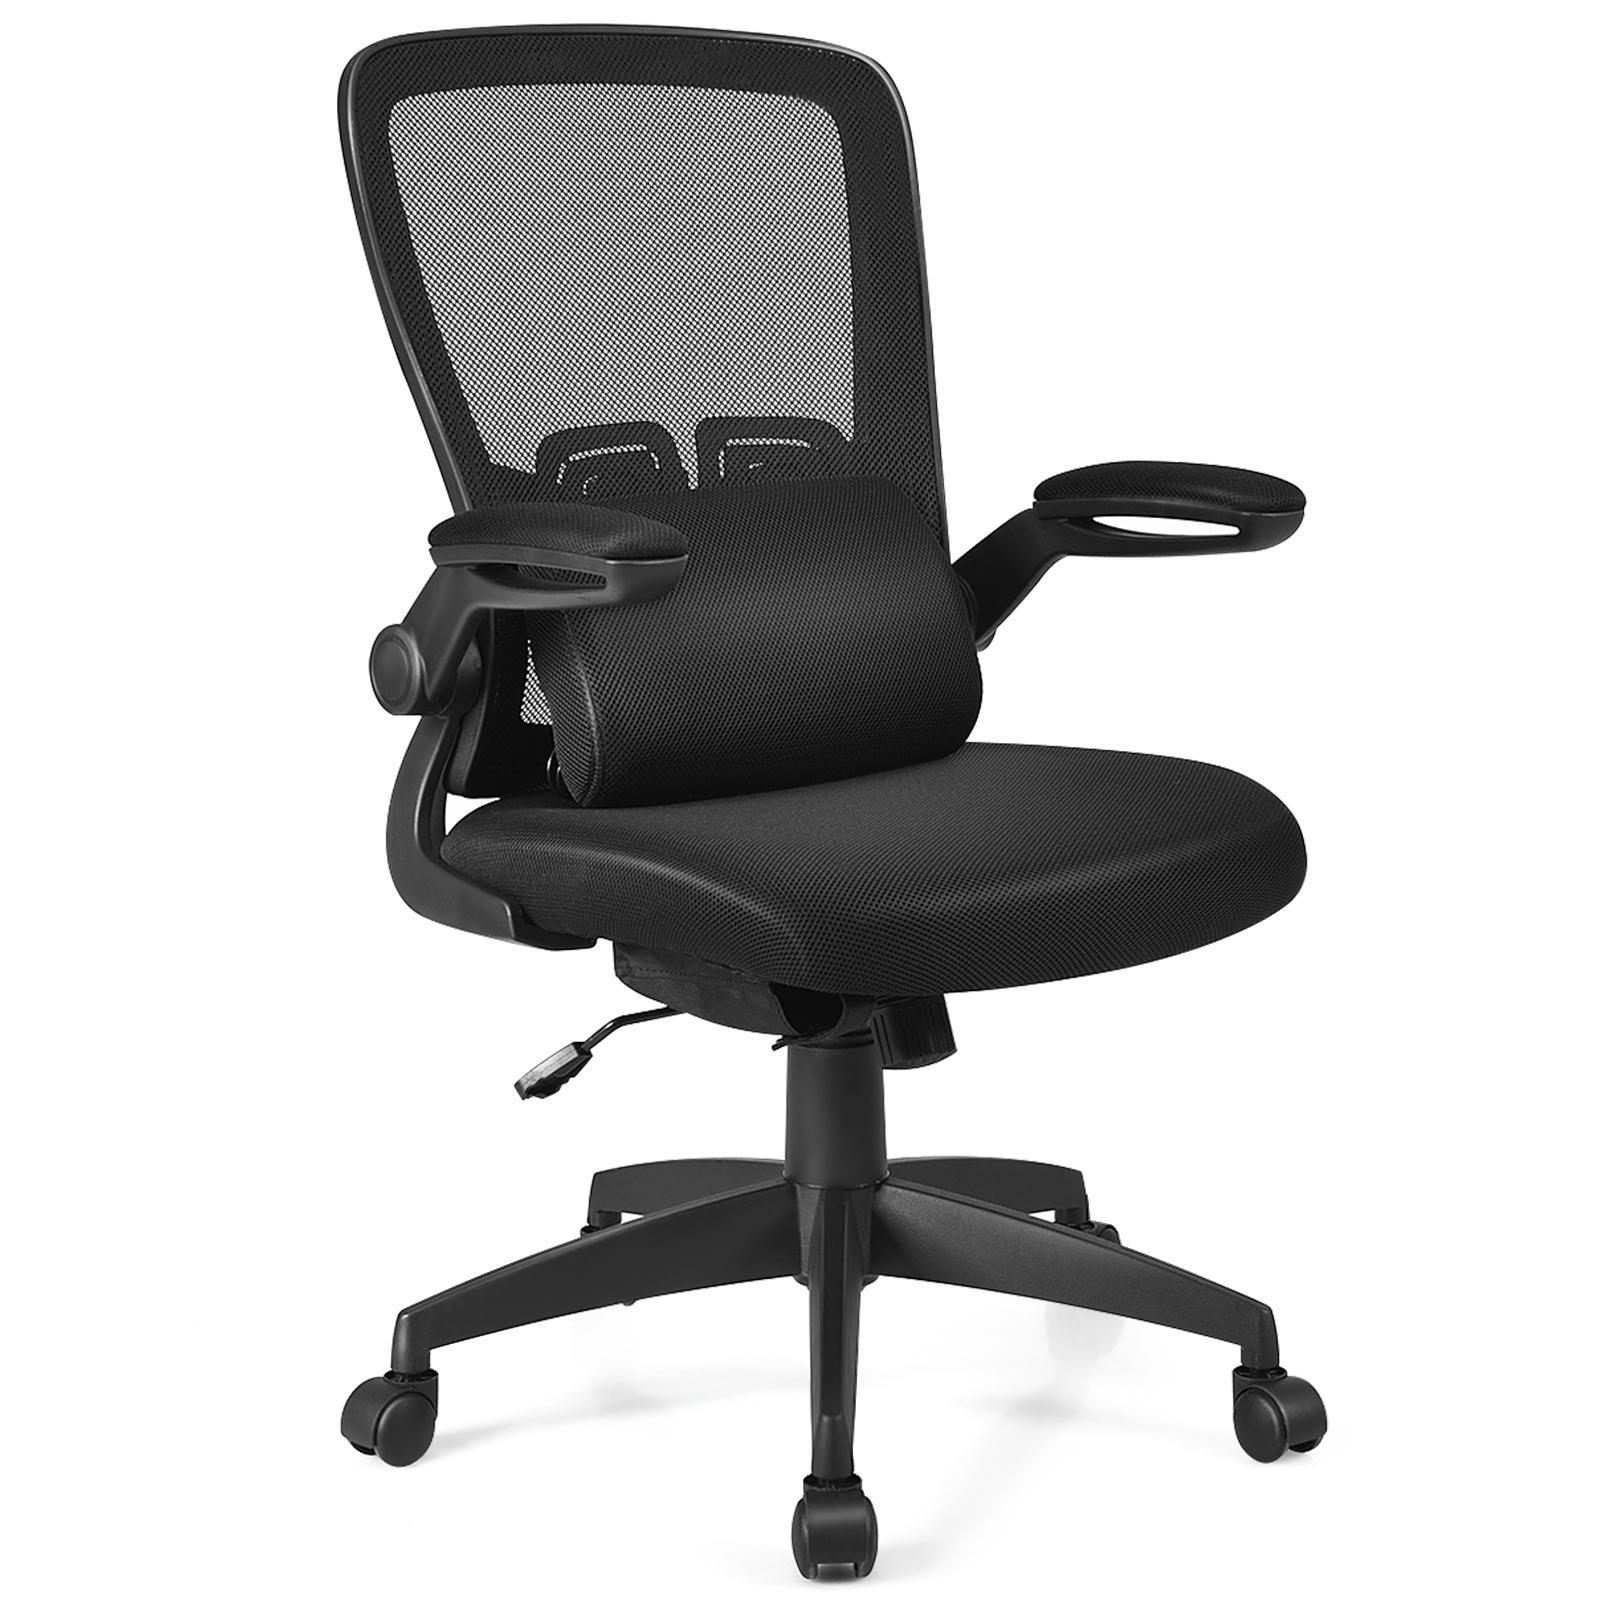 Giantex Mesh Office Chair Ergonomic Swivel Computer Chair Height Adjustable Gaming Executive Recliner,Black